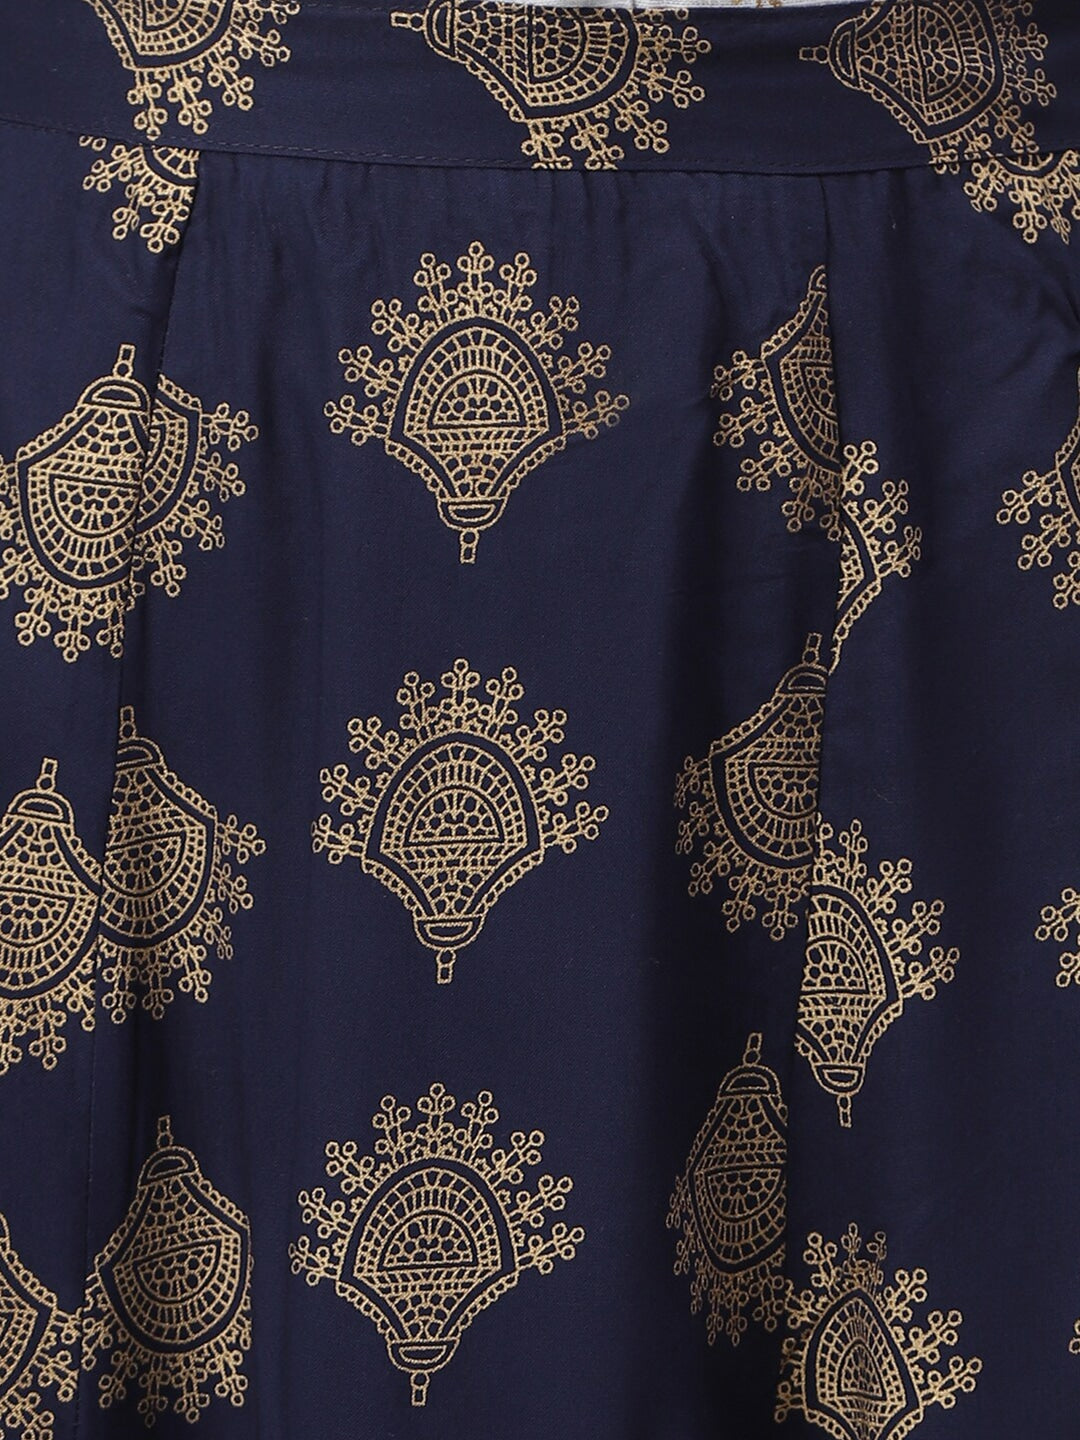 Gold Printed Rayon Shirt & Skirt Set (Off White,Blue)